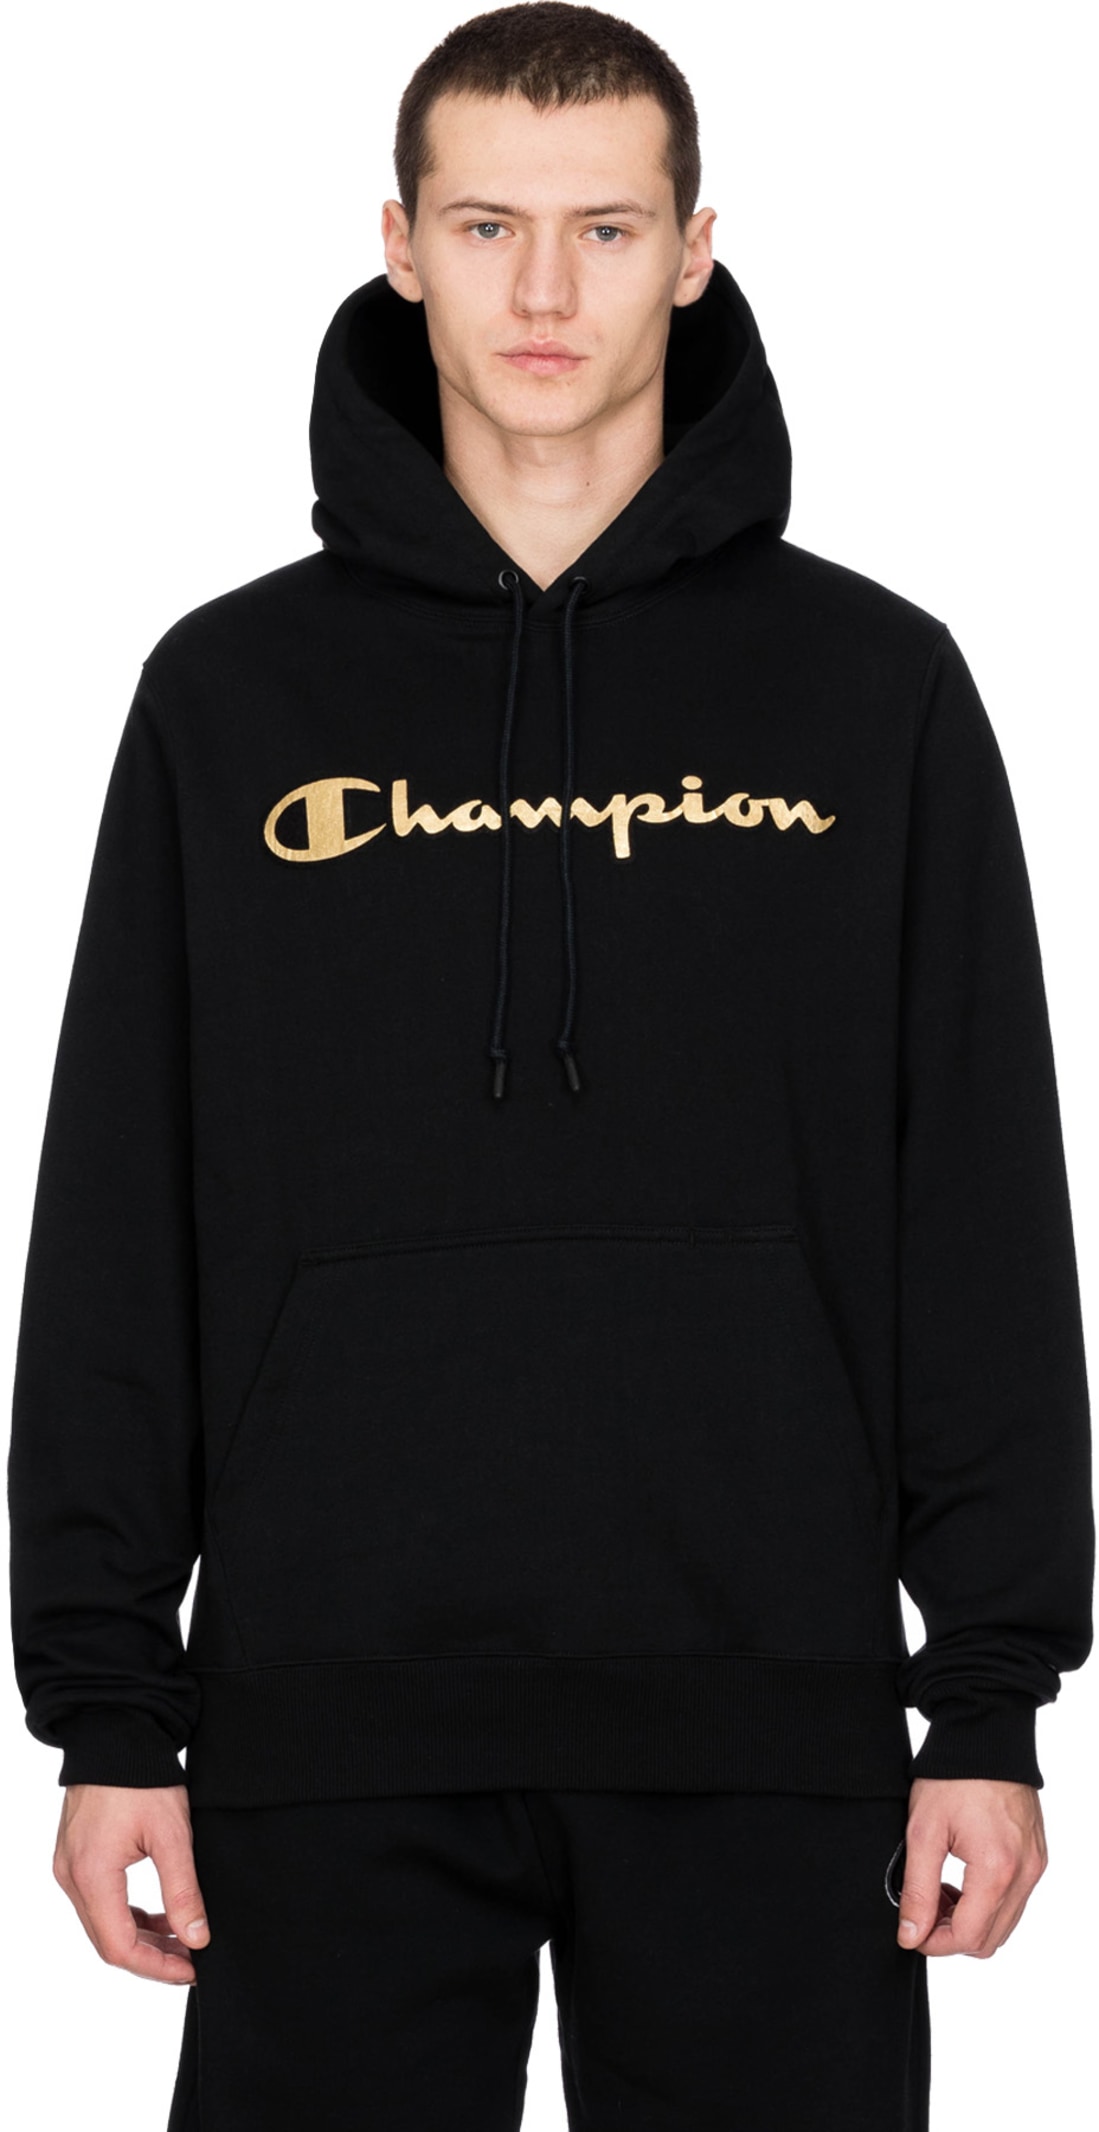 black and gold champion sweatsuit